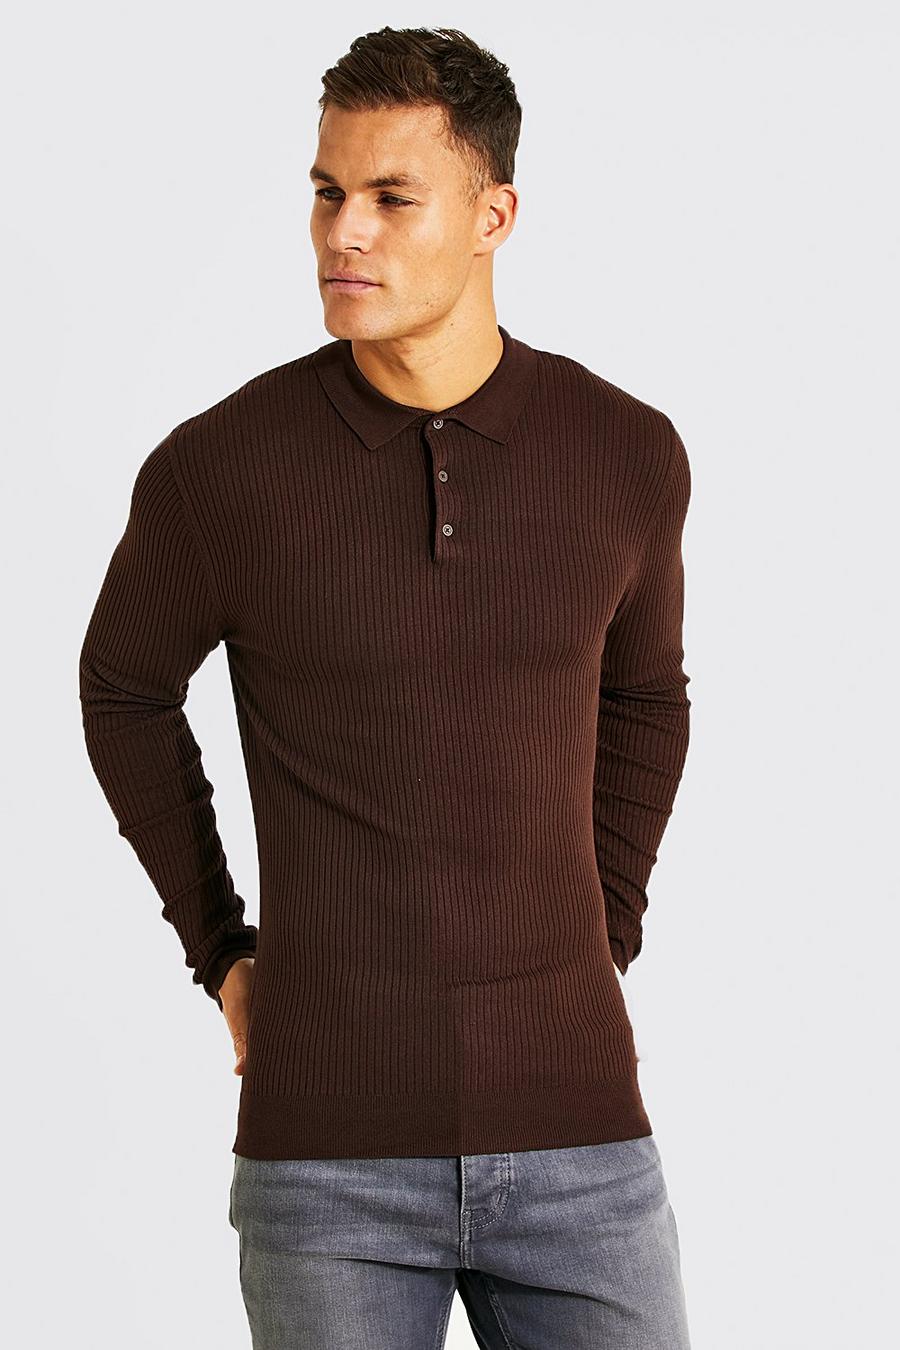 Chocolate brown חולצת פולו ארוגה בגזרה צמודה מבד ממוחזר לגברים גבוהים